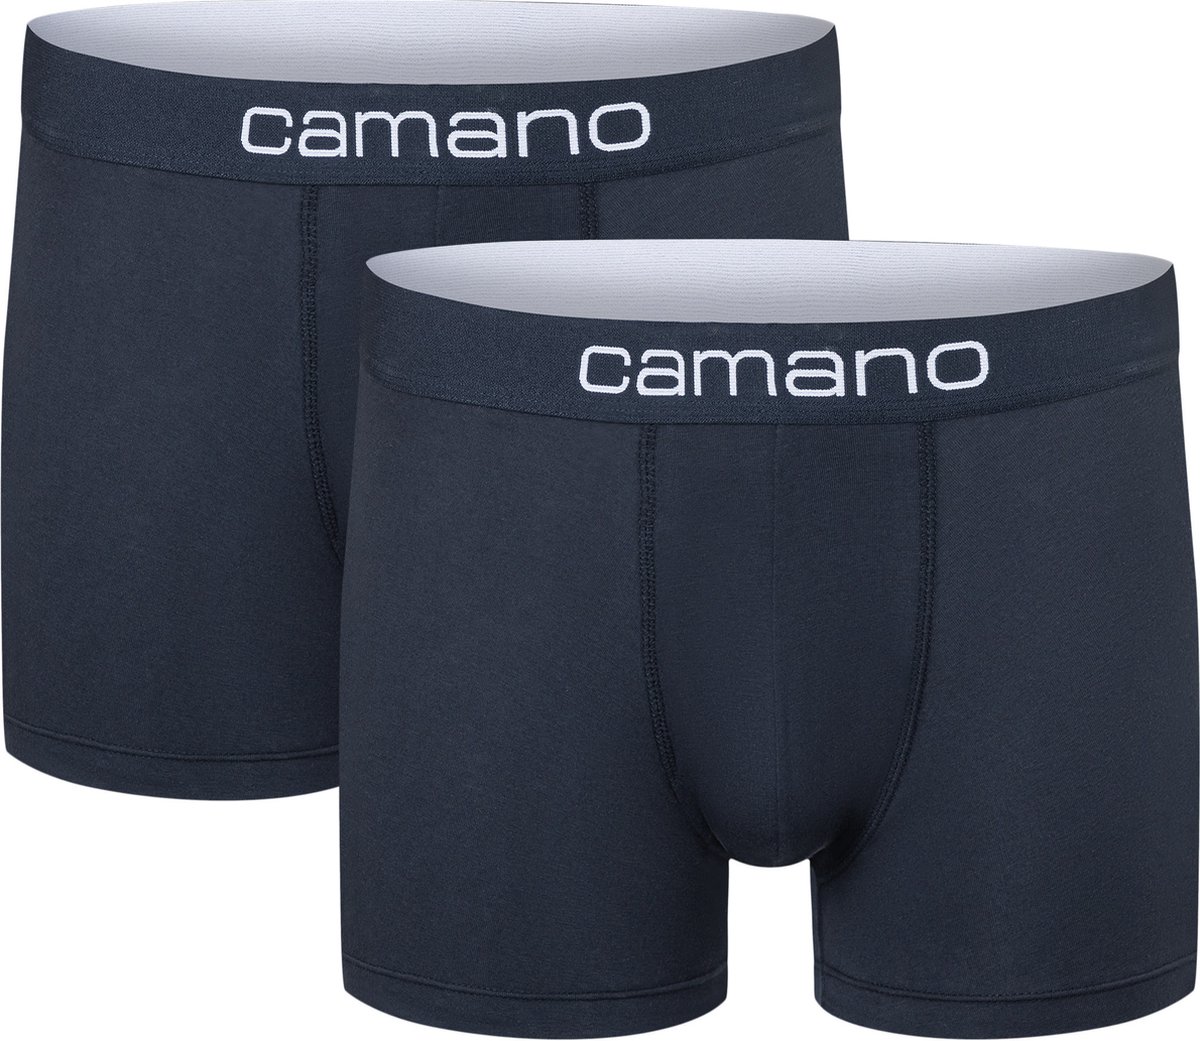 Camano - Boxershorts - High Comfort - Katoen - Stretch - Top Boxers - Navy Blauw - M